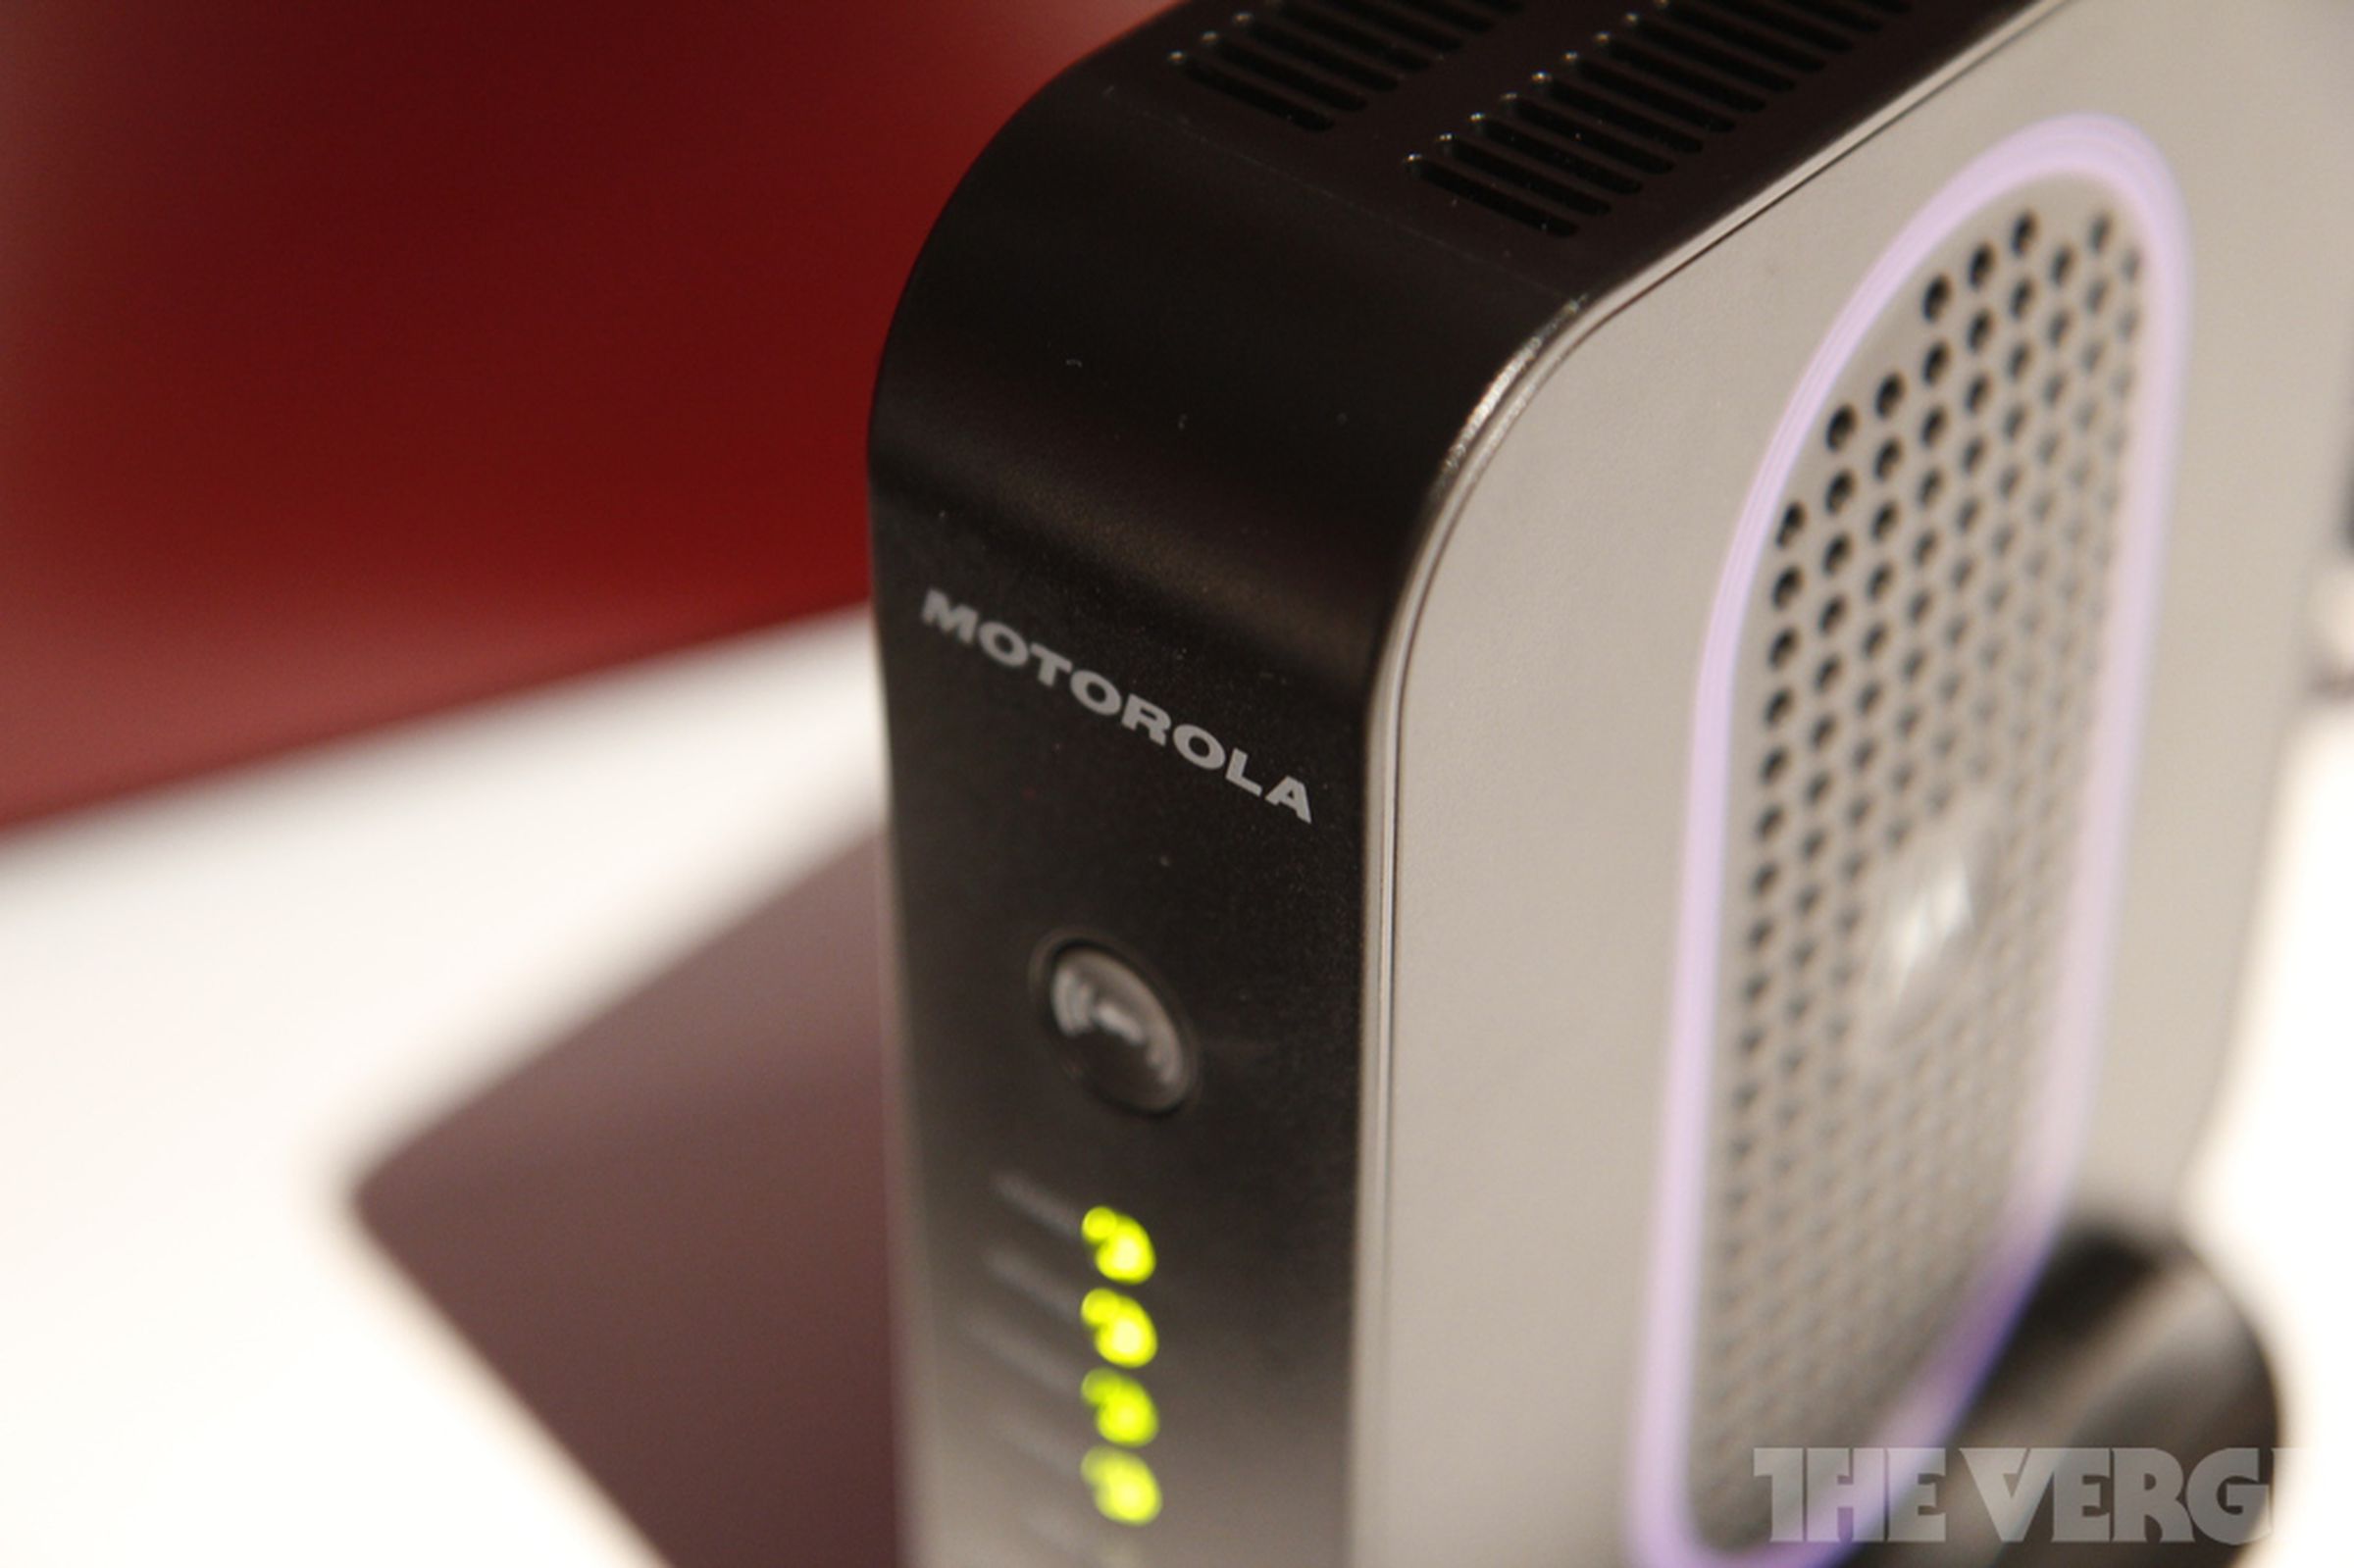 Motorola Home Gateway hands-on photos